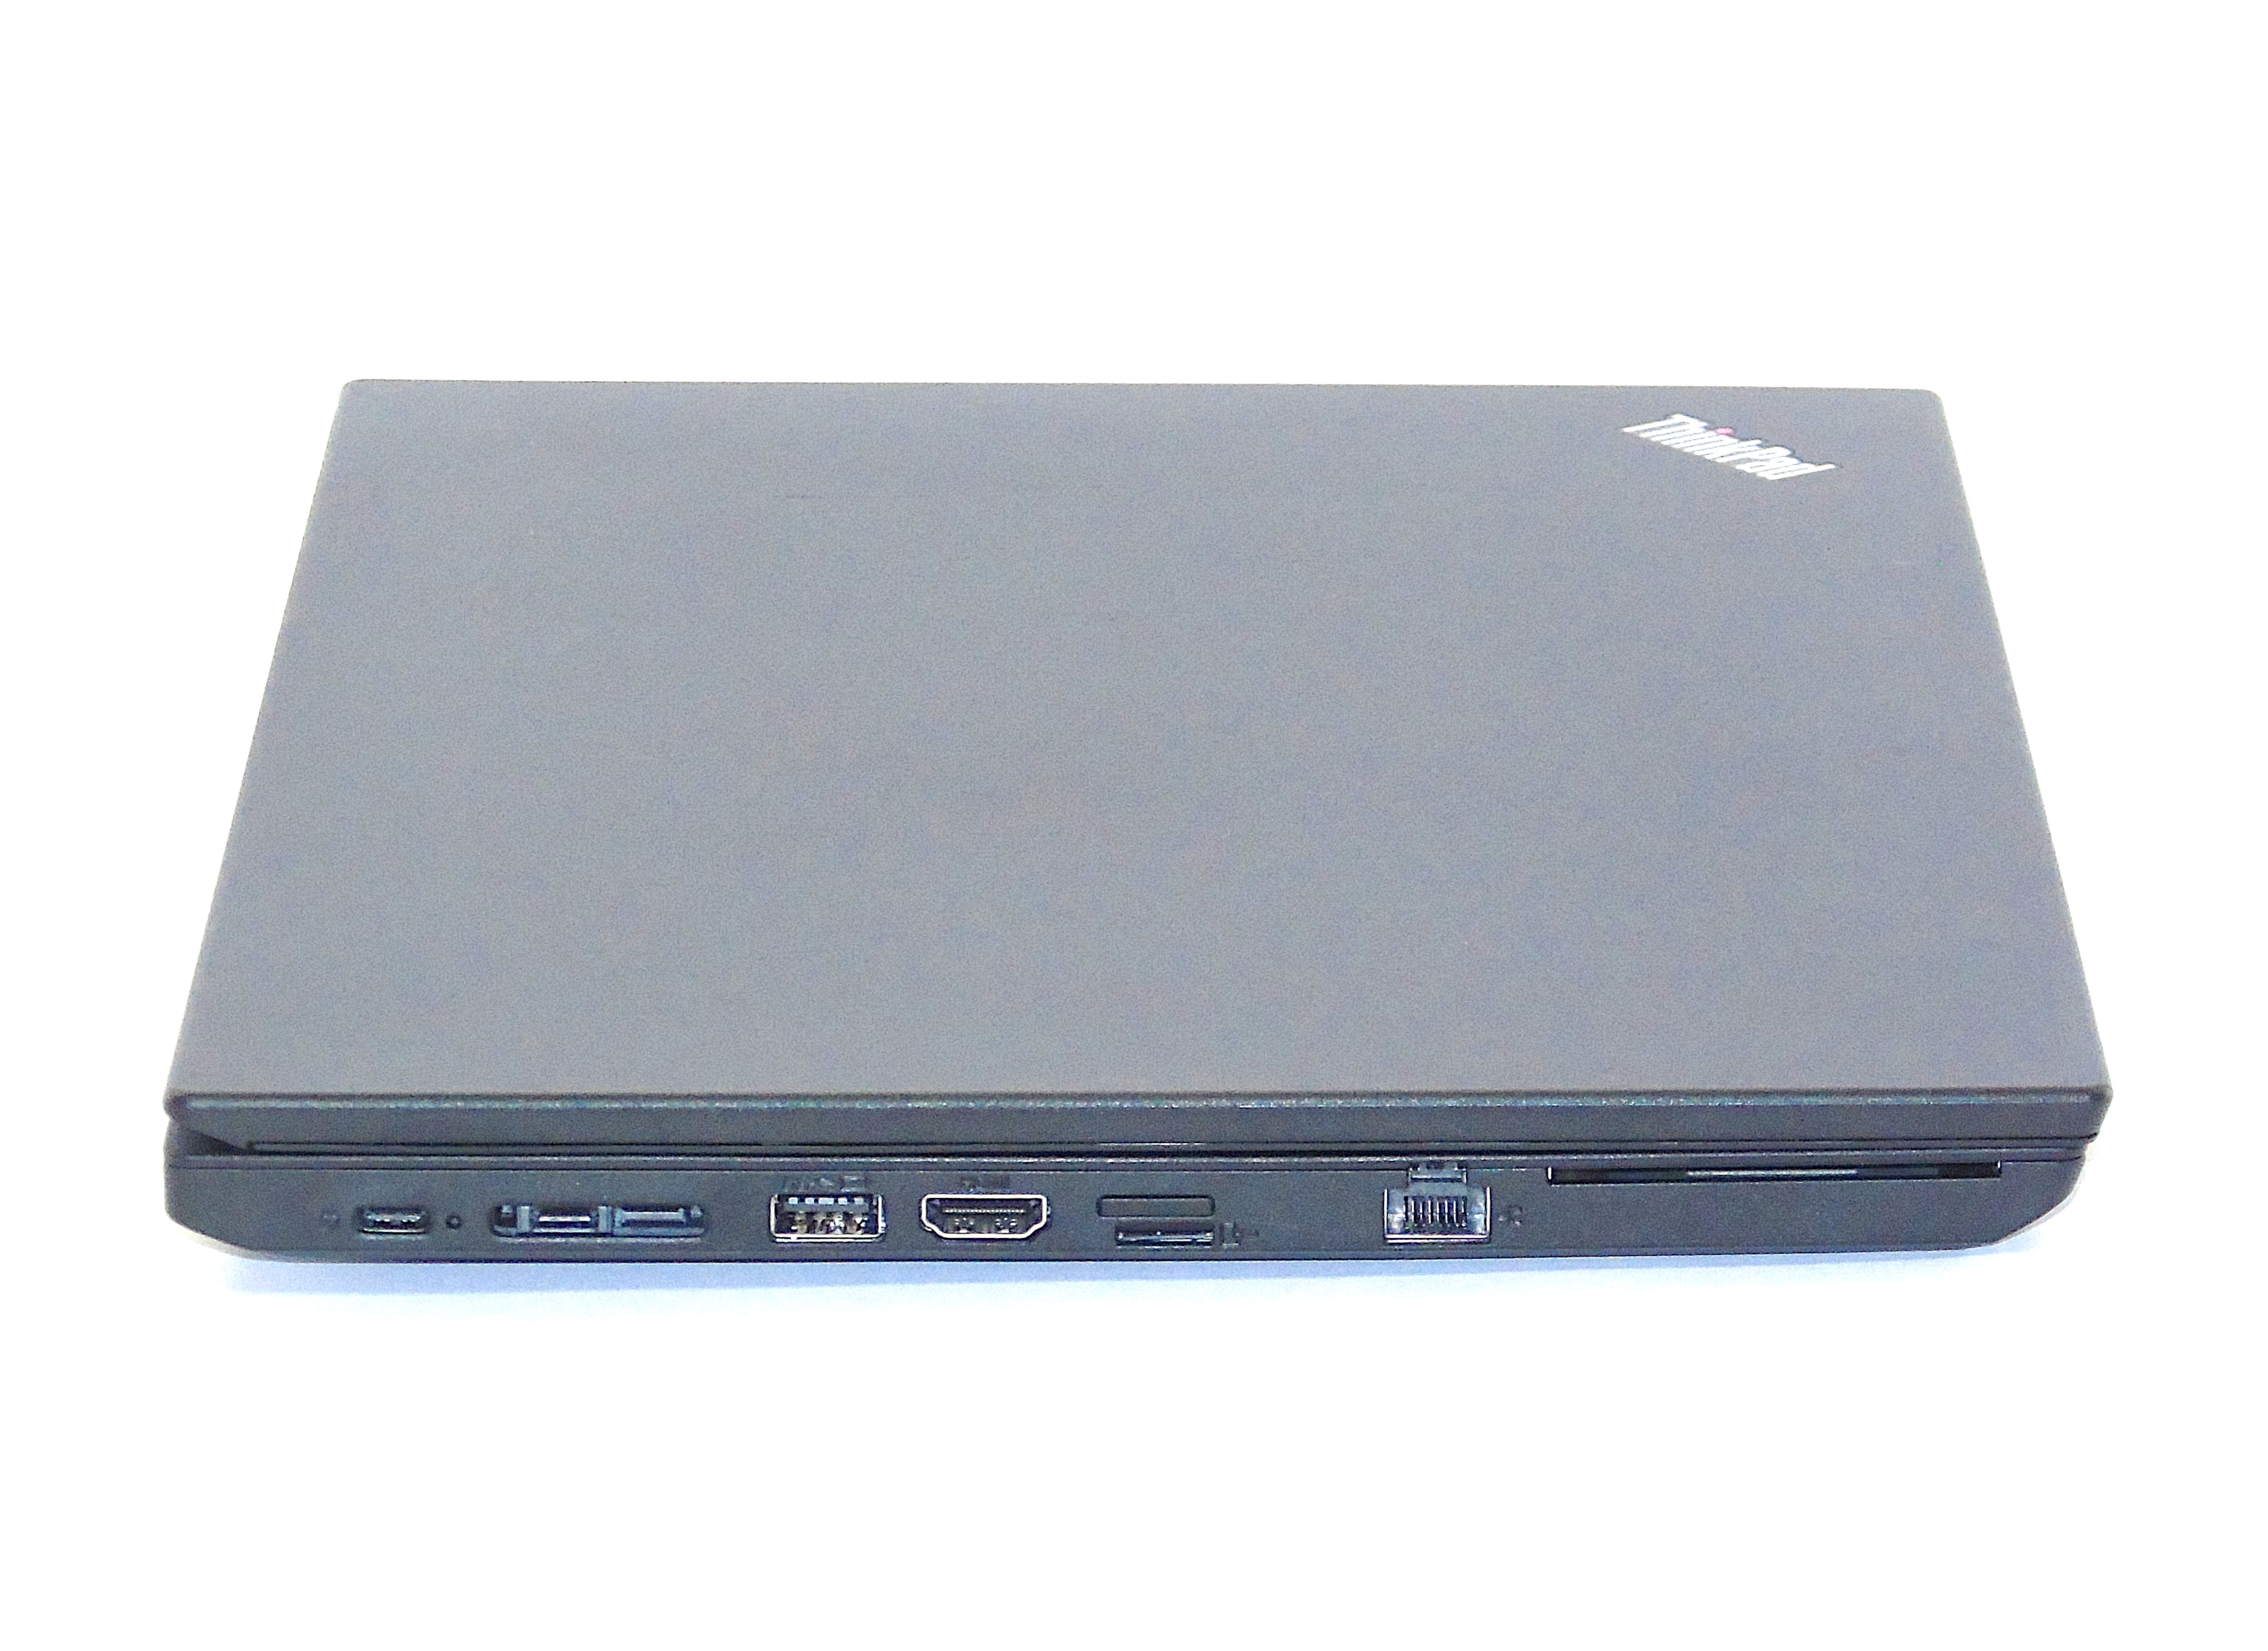 Lenovo ThinkPad L490 Laptop, 14" Core i5 8th Gen, 8GB RAM, 256GB SSD